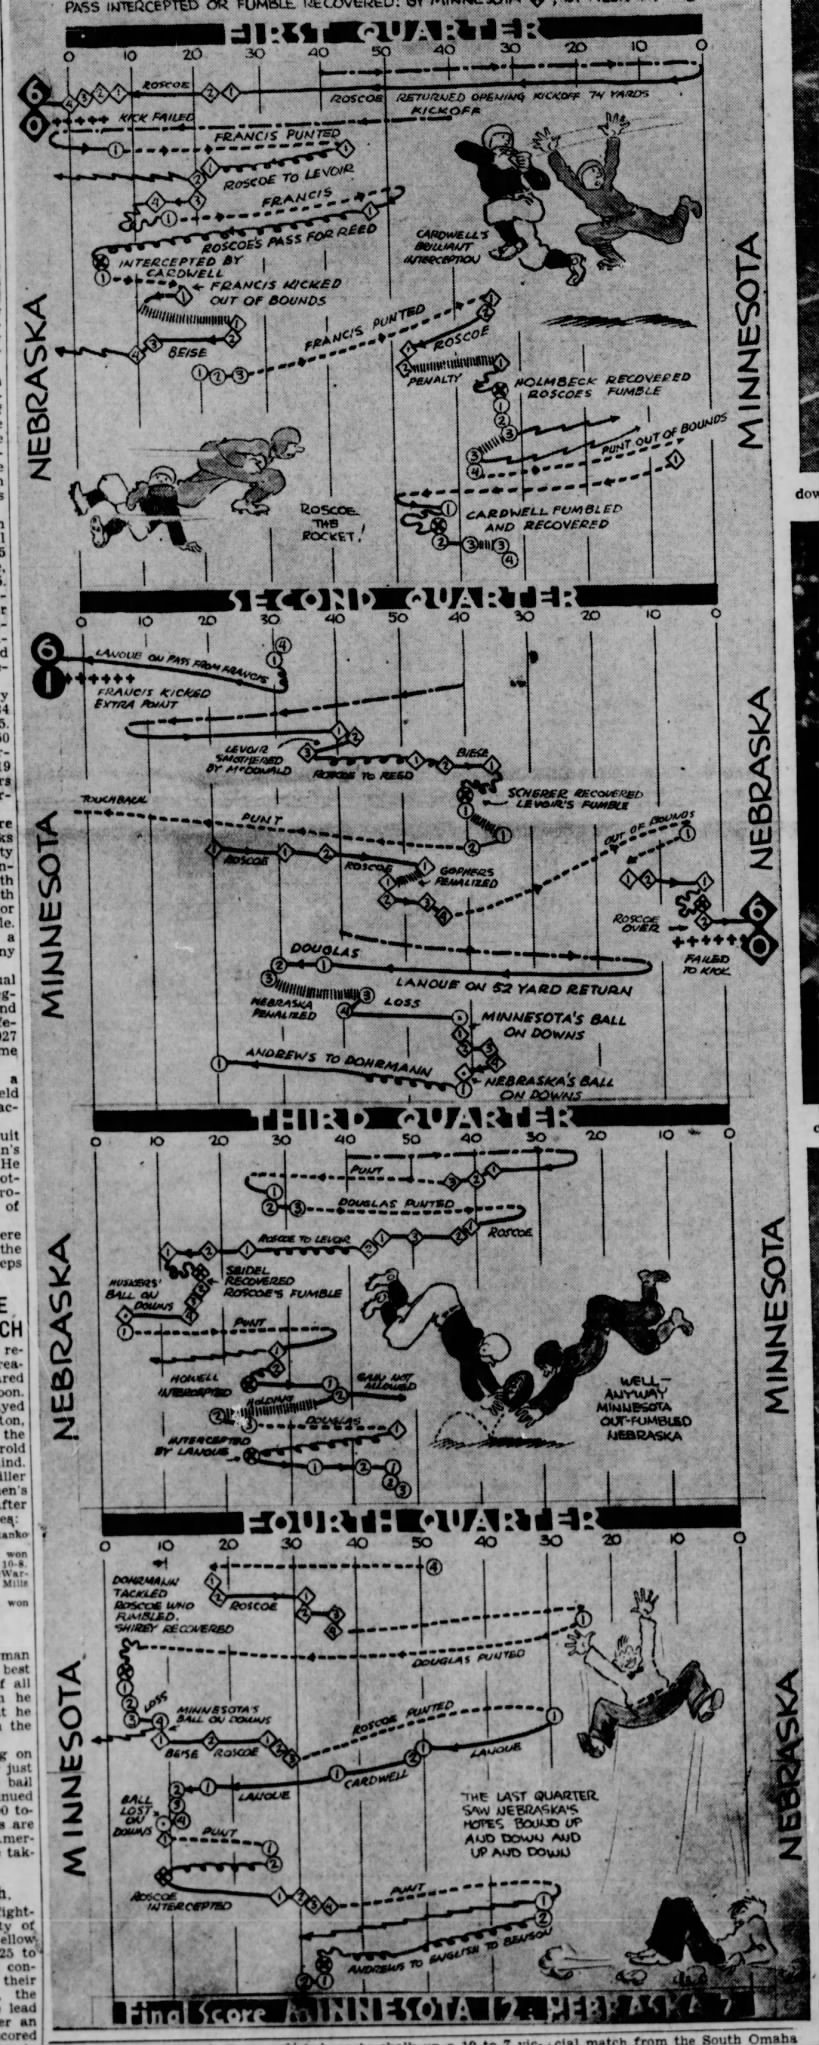 1935 Nebraska-Minnesota play chart